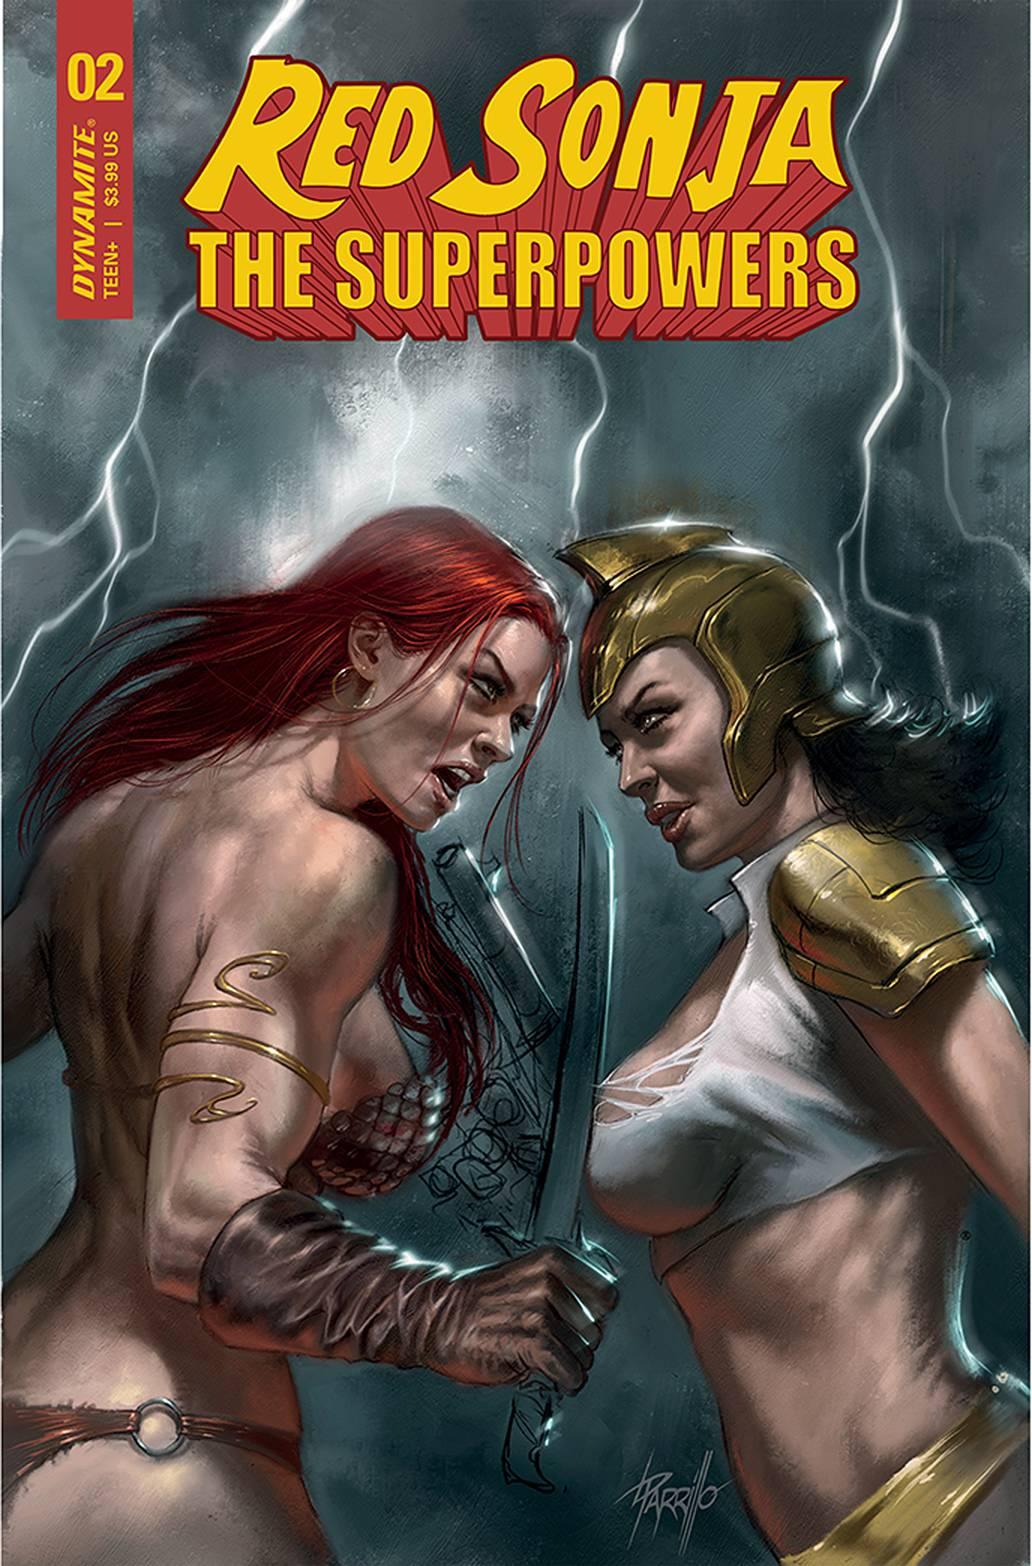 RED SONJA THE SUPERPOWERS #2 CVR A PARRILLO (SHIPS 02-10-21) - PCKComics.com